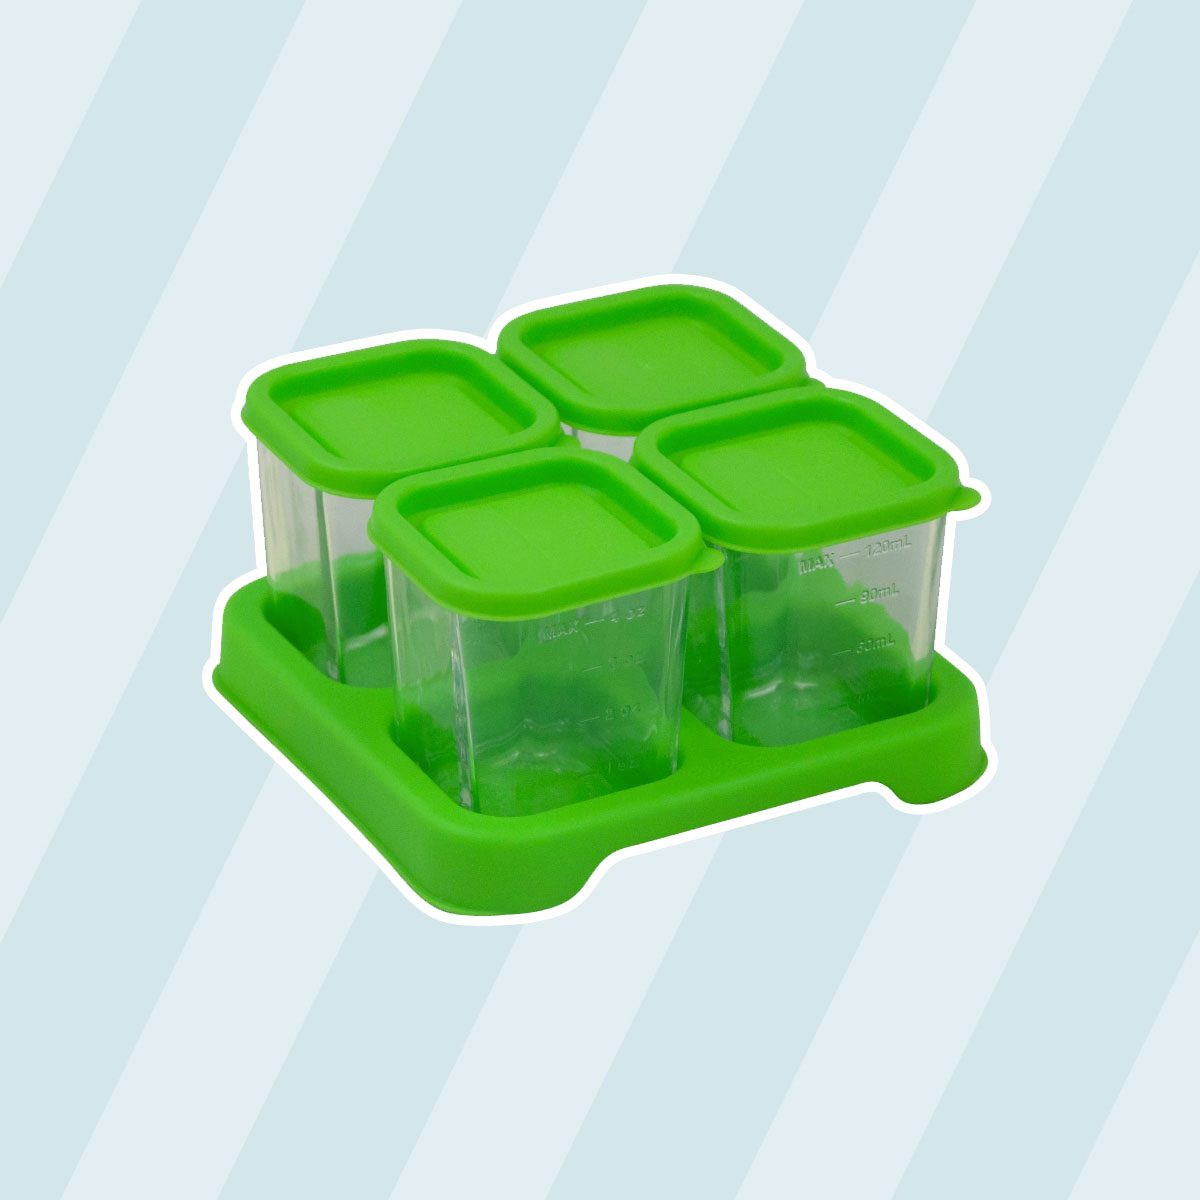 https://www.tasteofhome.com/wp-content/uploads/2019/05/Glass-Cubes.jpg?fit=700%2C700